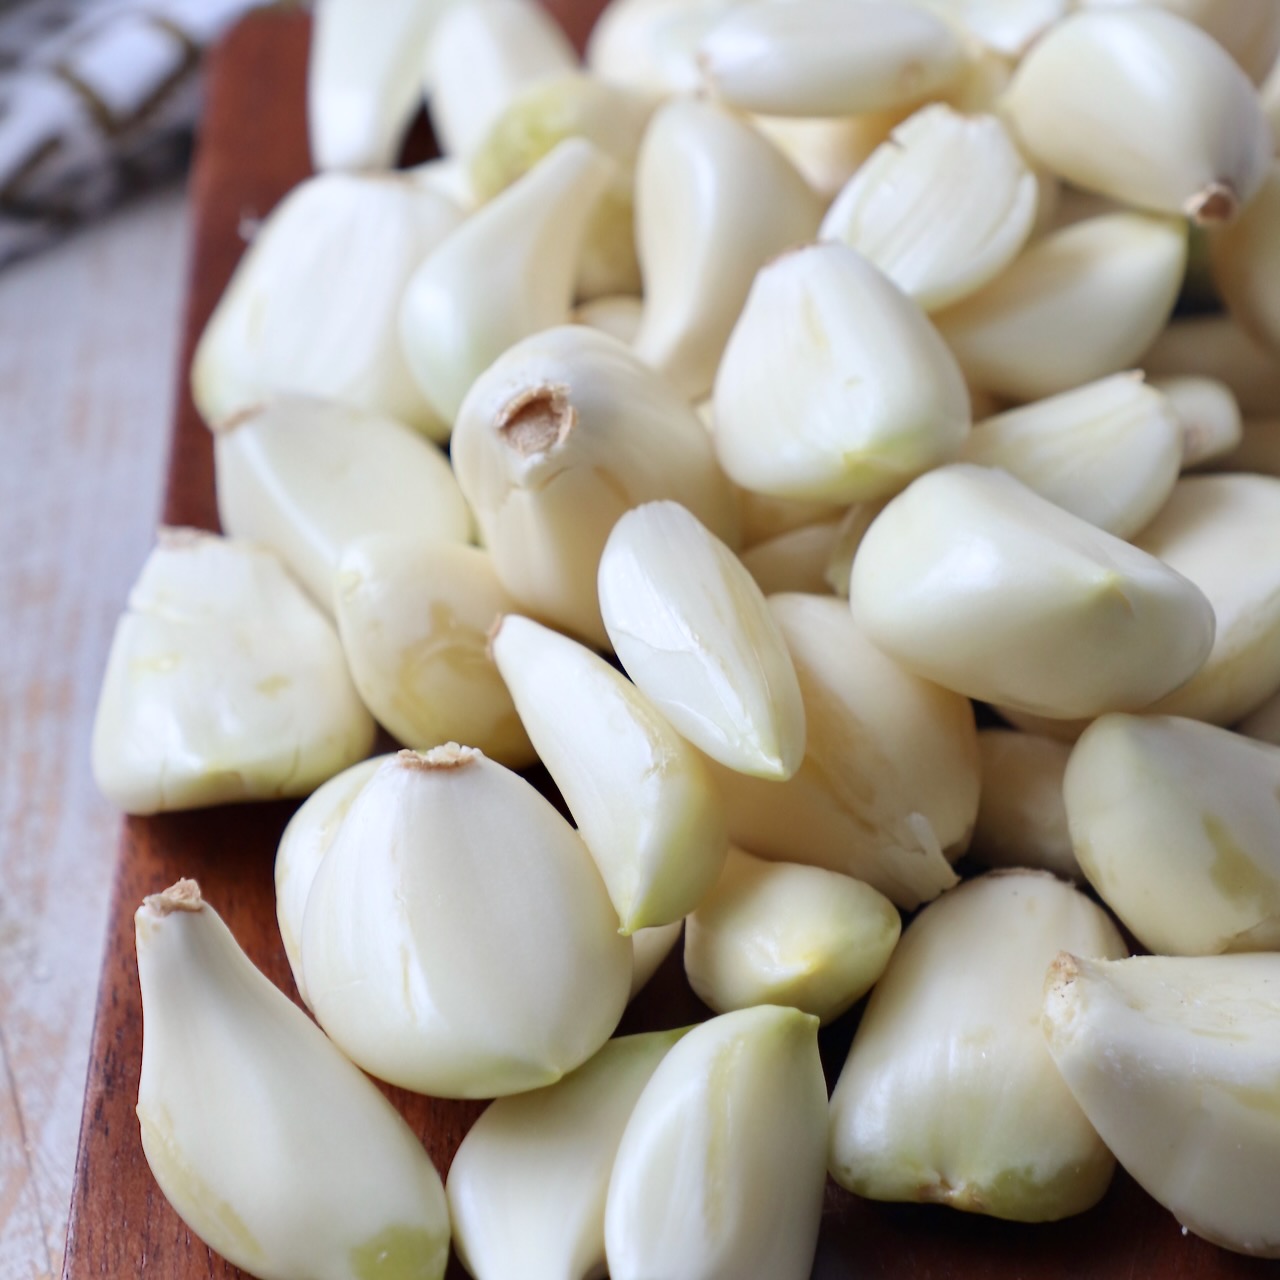 https://whitneybond.com/wp-content/uploads/2023/01/how-to-peel-garlic-12.jpeg